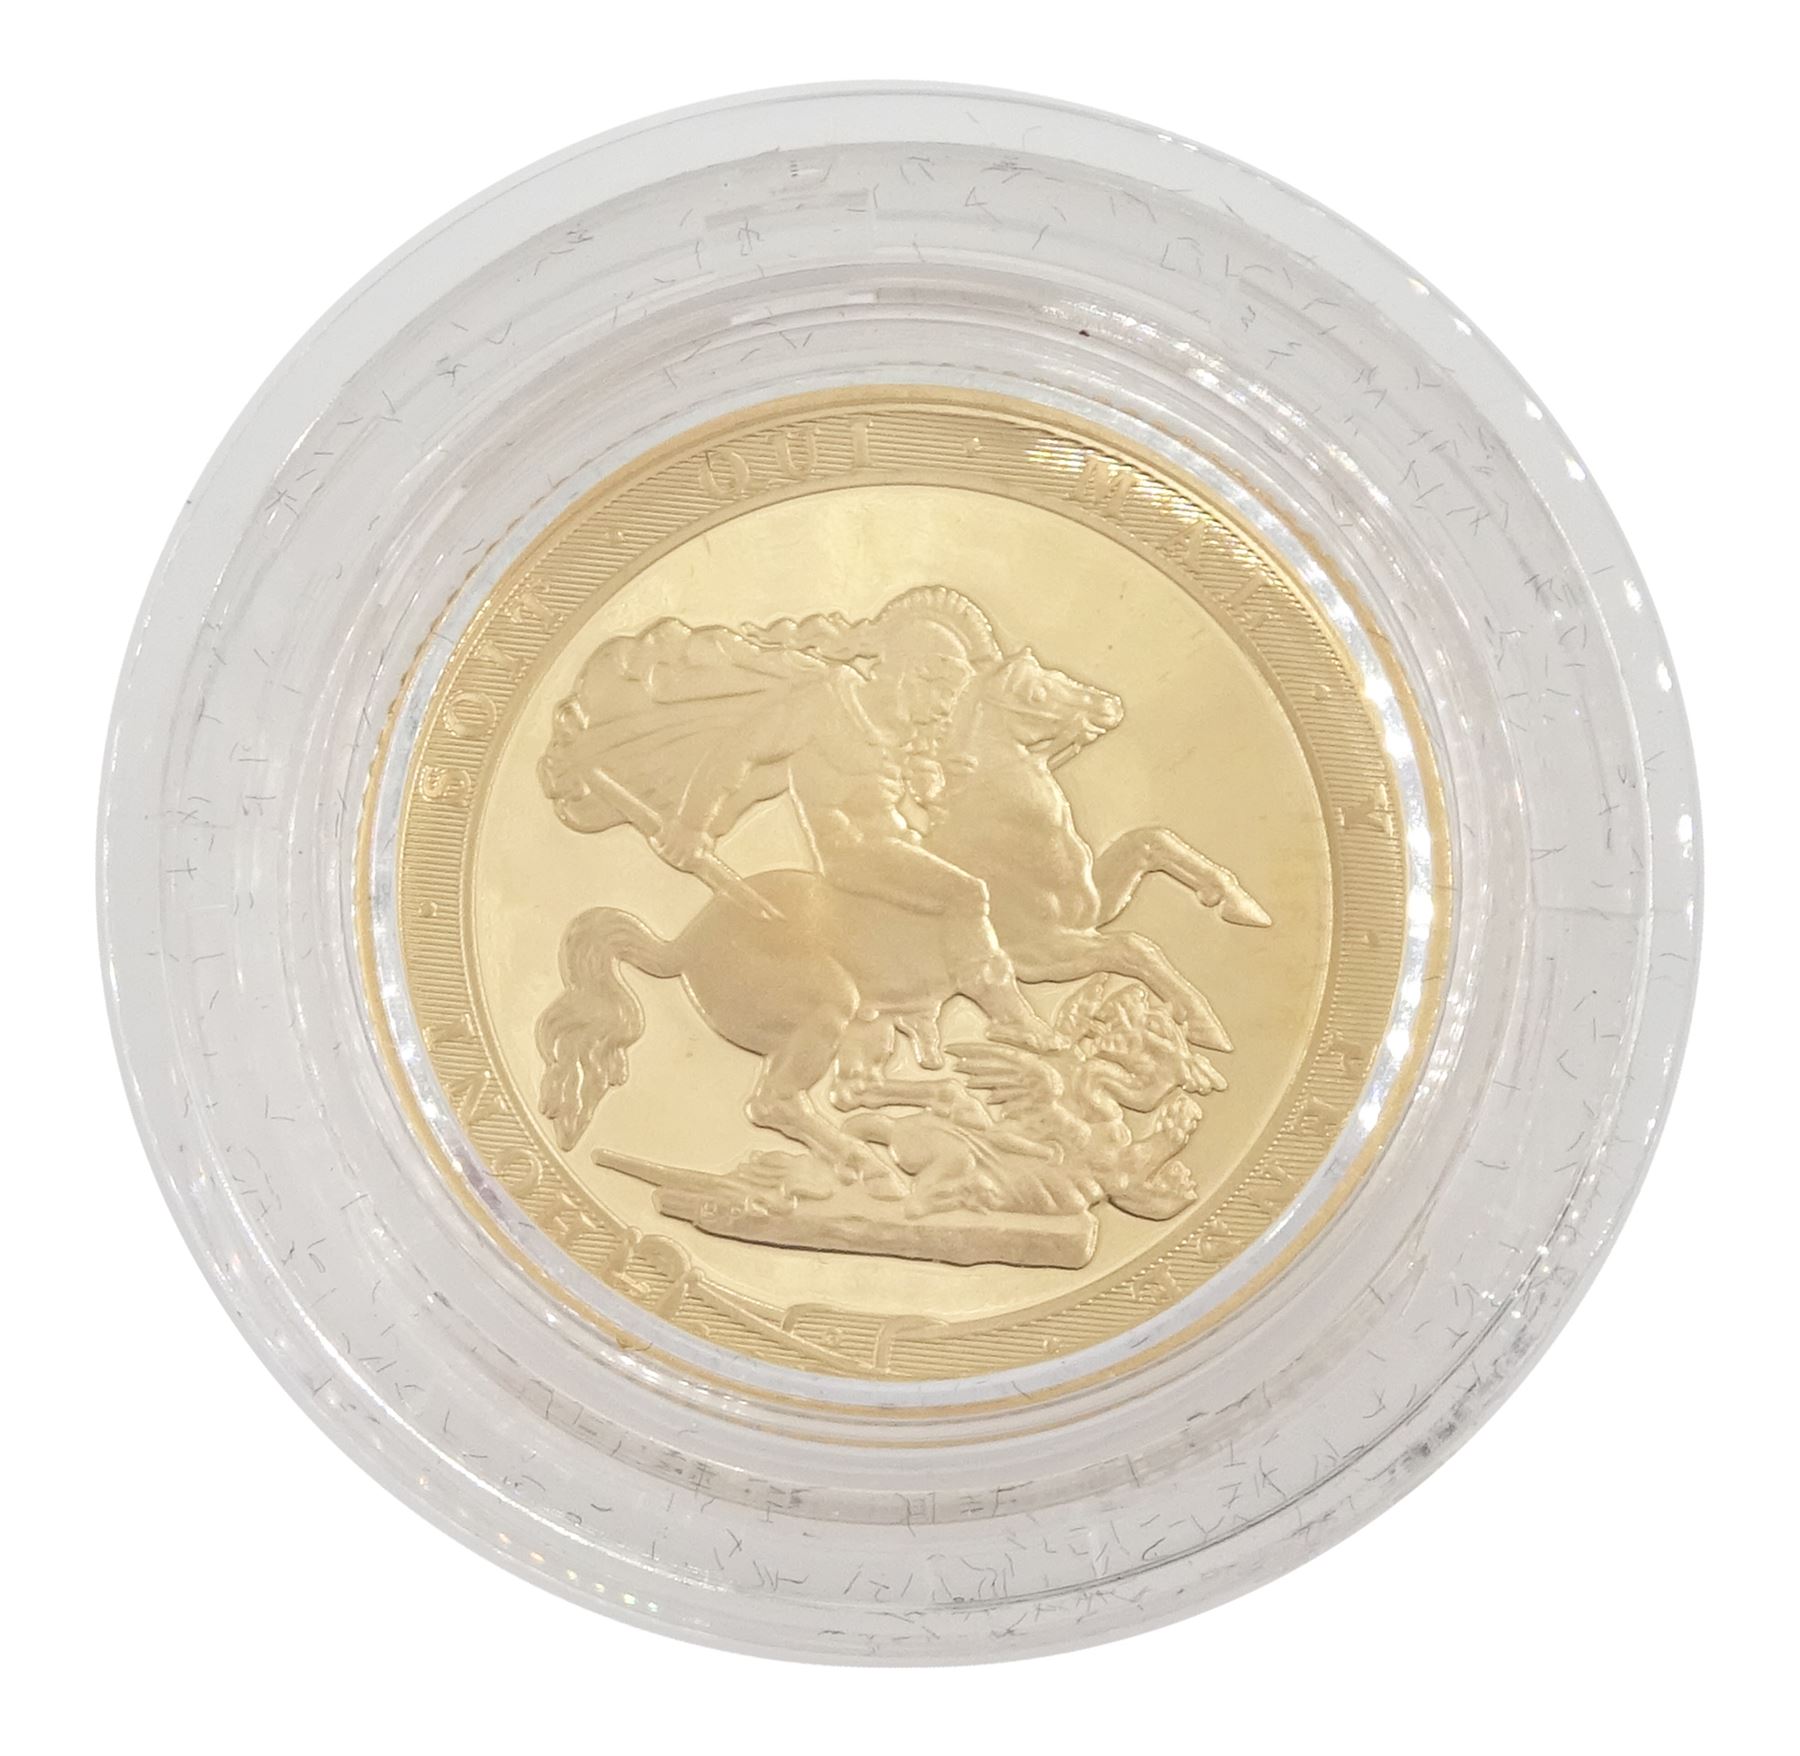 Queen Elizabeth II 2017 gold proof sovereign coin - Image 3 of 3